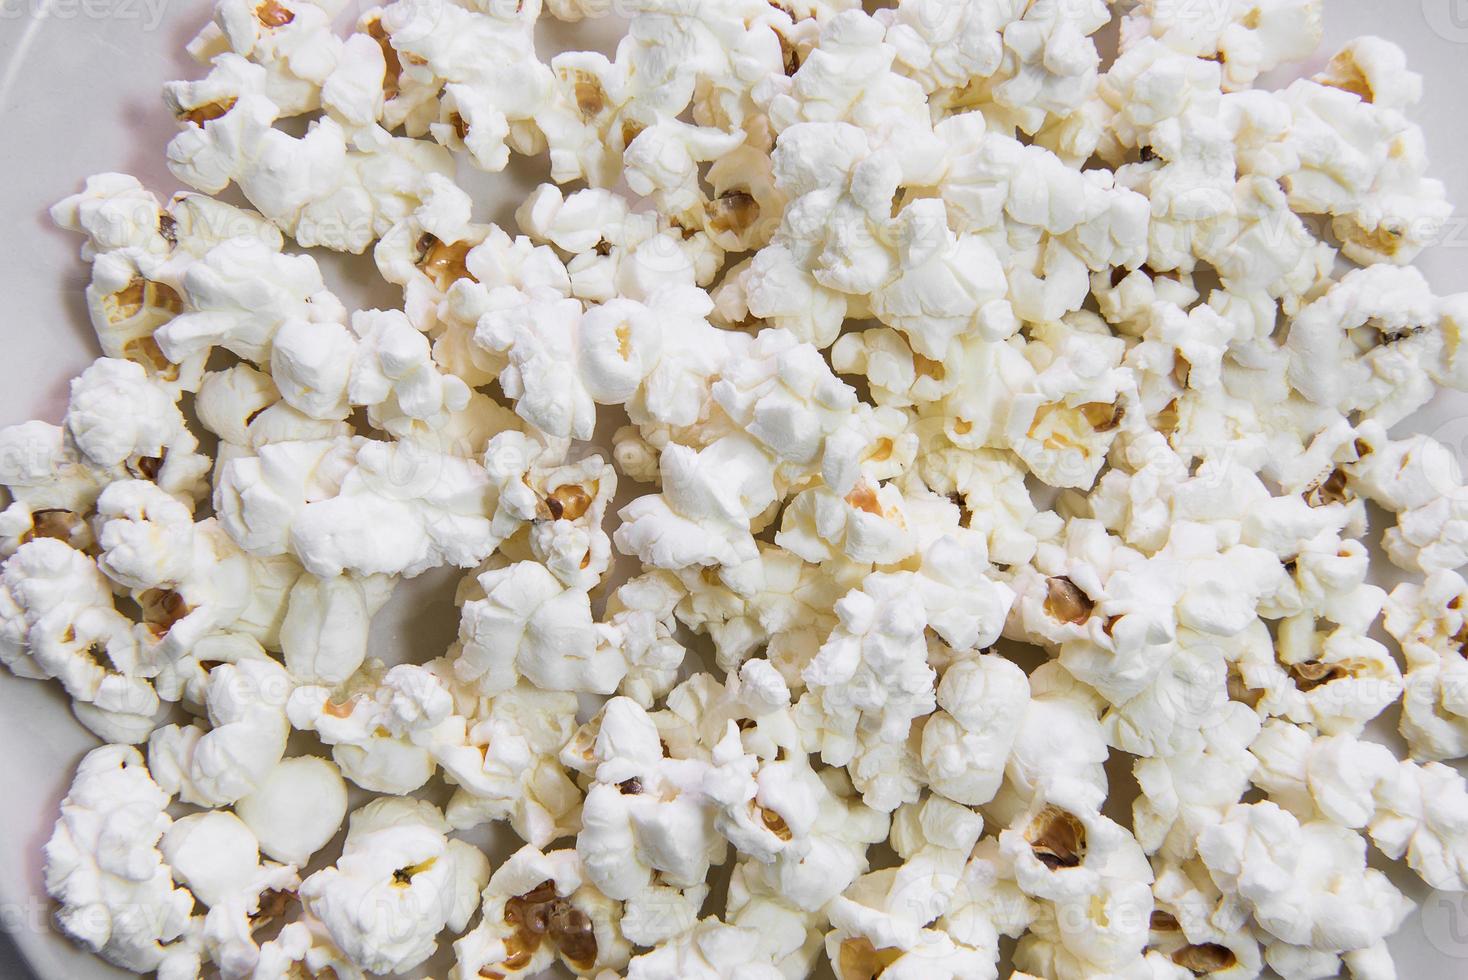 popcorn close-up foto